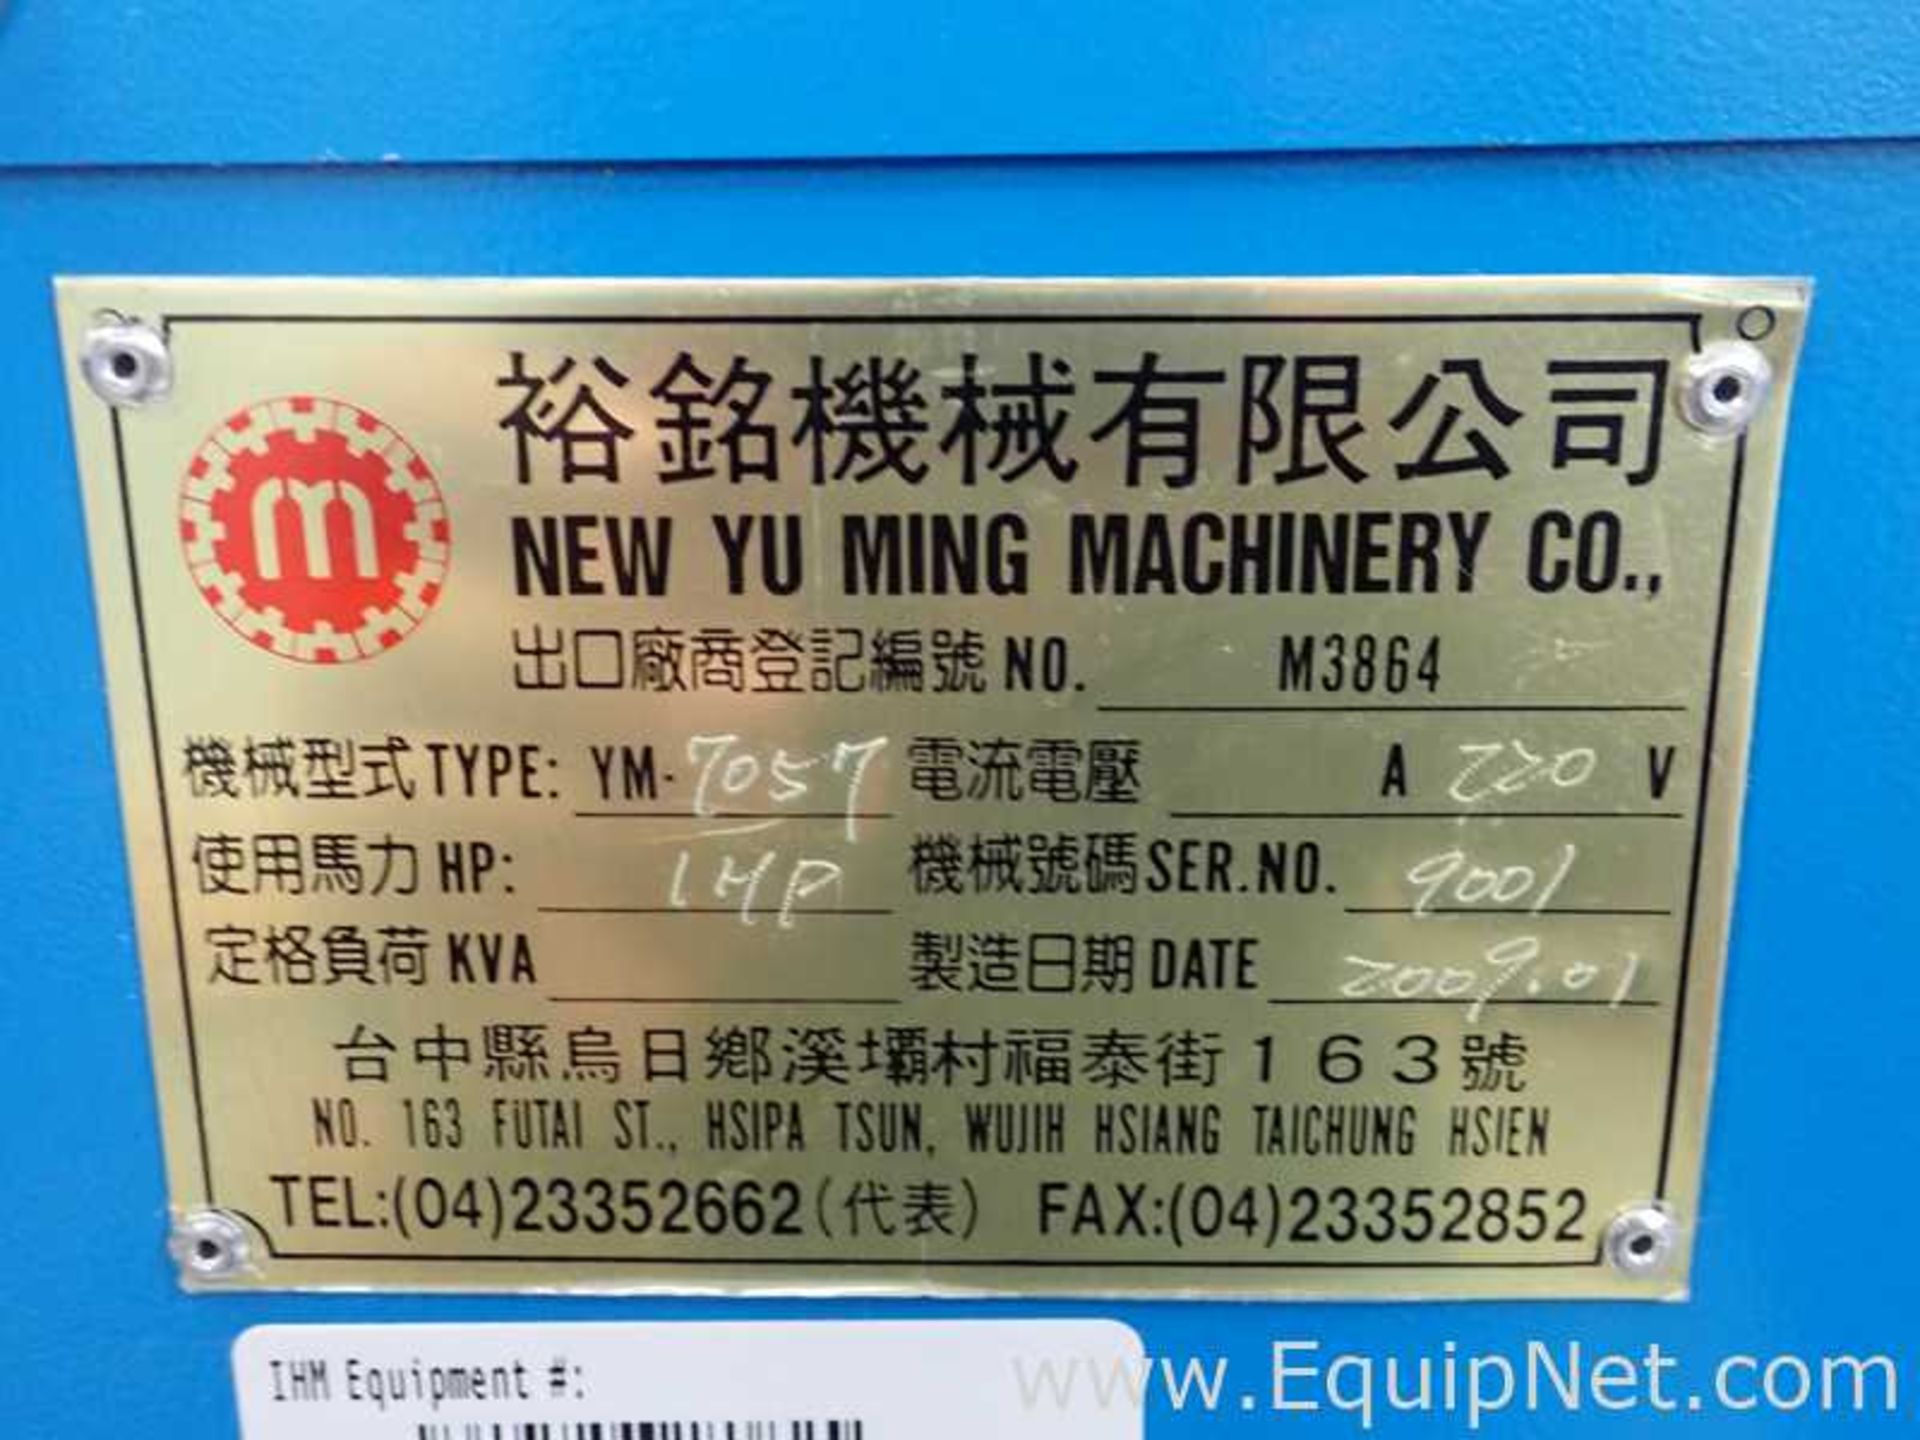 New Yu Ming Machinery Co. YM-7057 Delasting Machine - Image 24 of 25